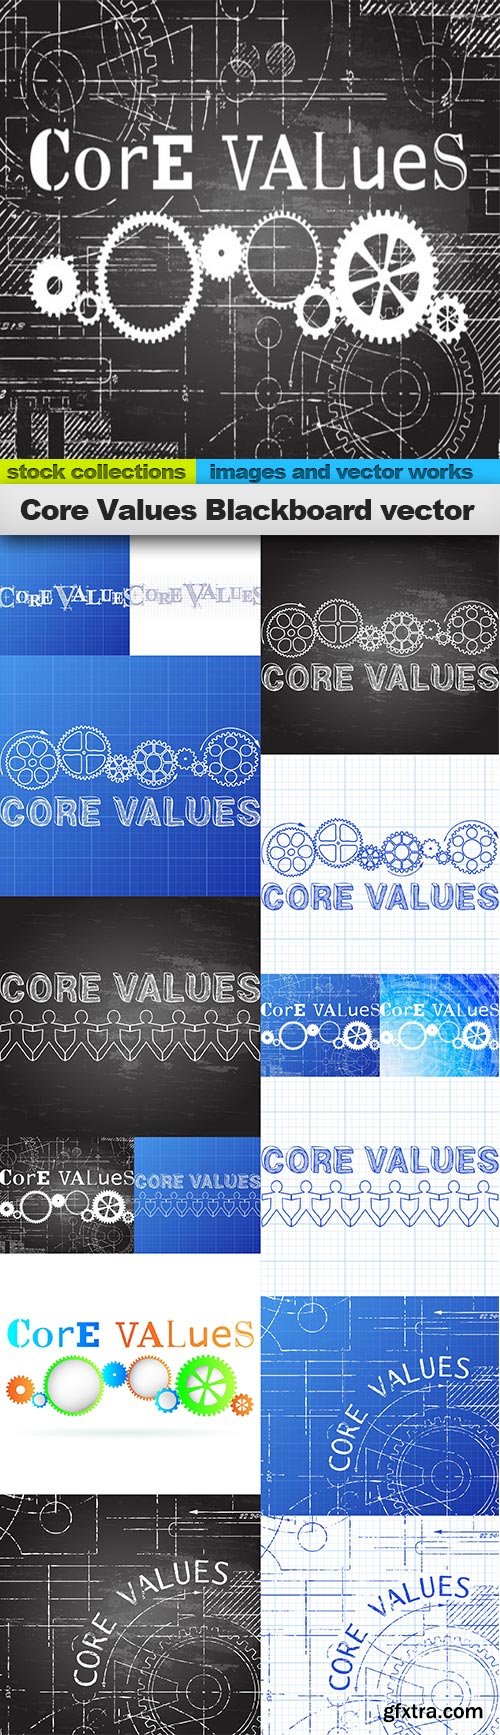 Core Values Blackboard vector, 15 x EPS